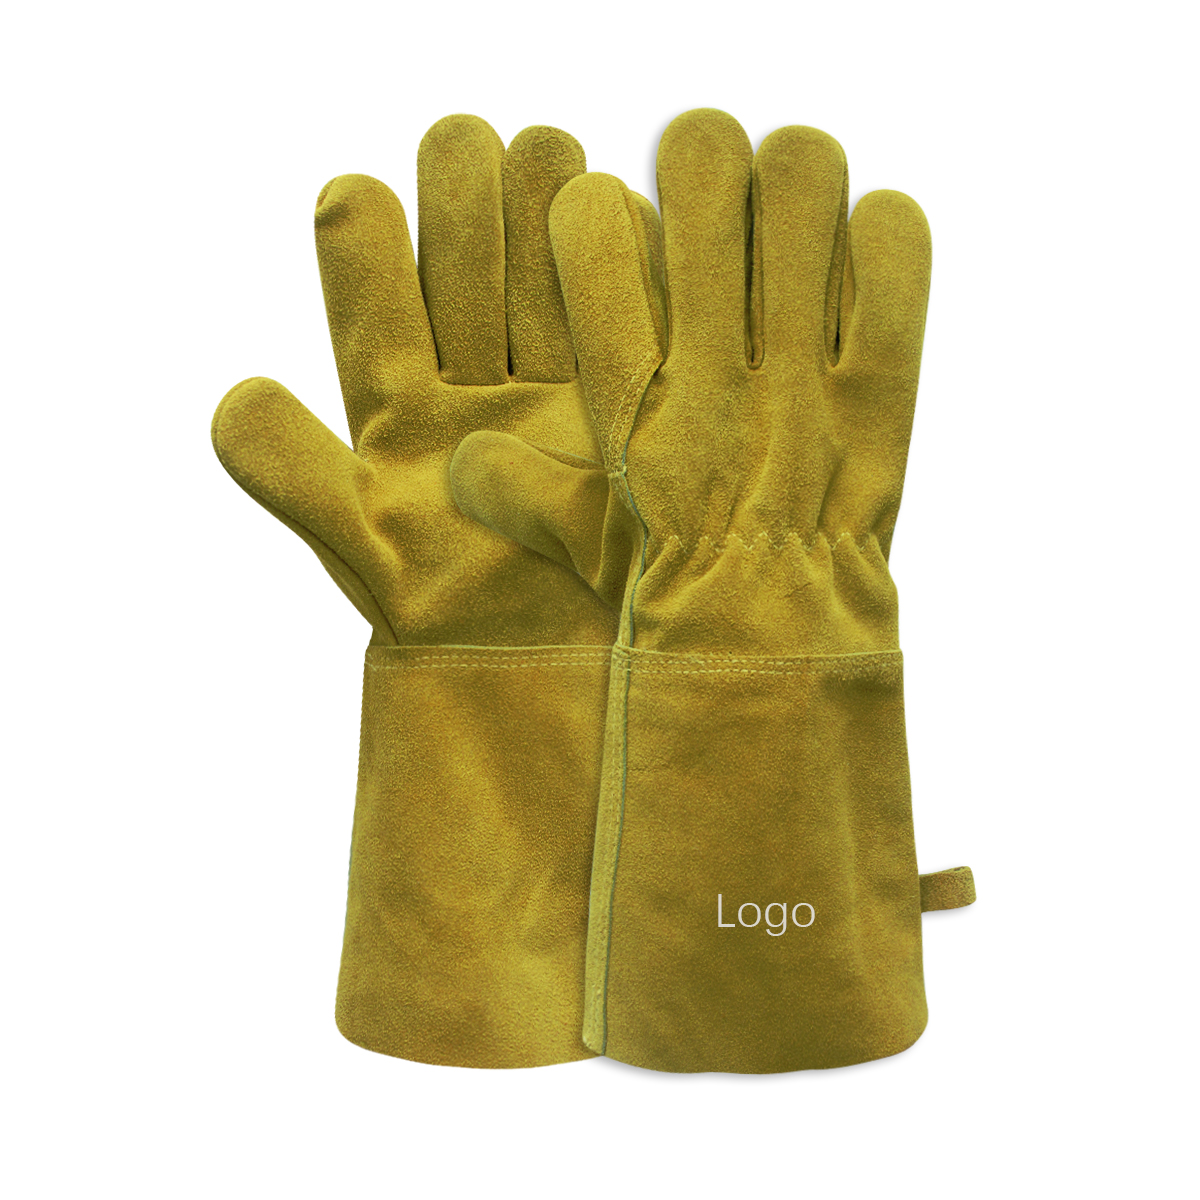 Mig Welding Welder Tig Gloves Guantes De Soldadura Product Cowhide Leather ការពារភ្លើងថ្មី